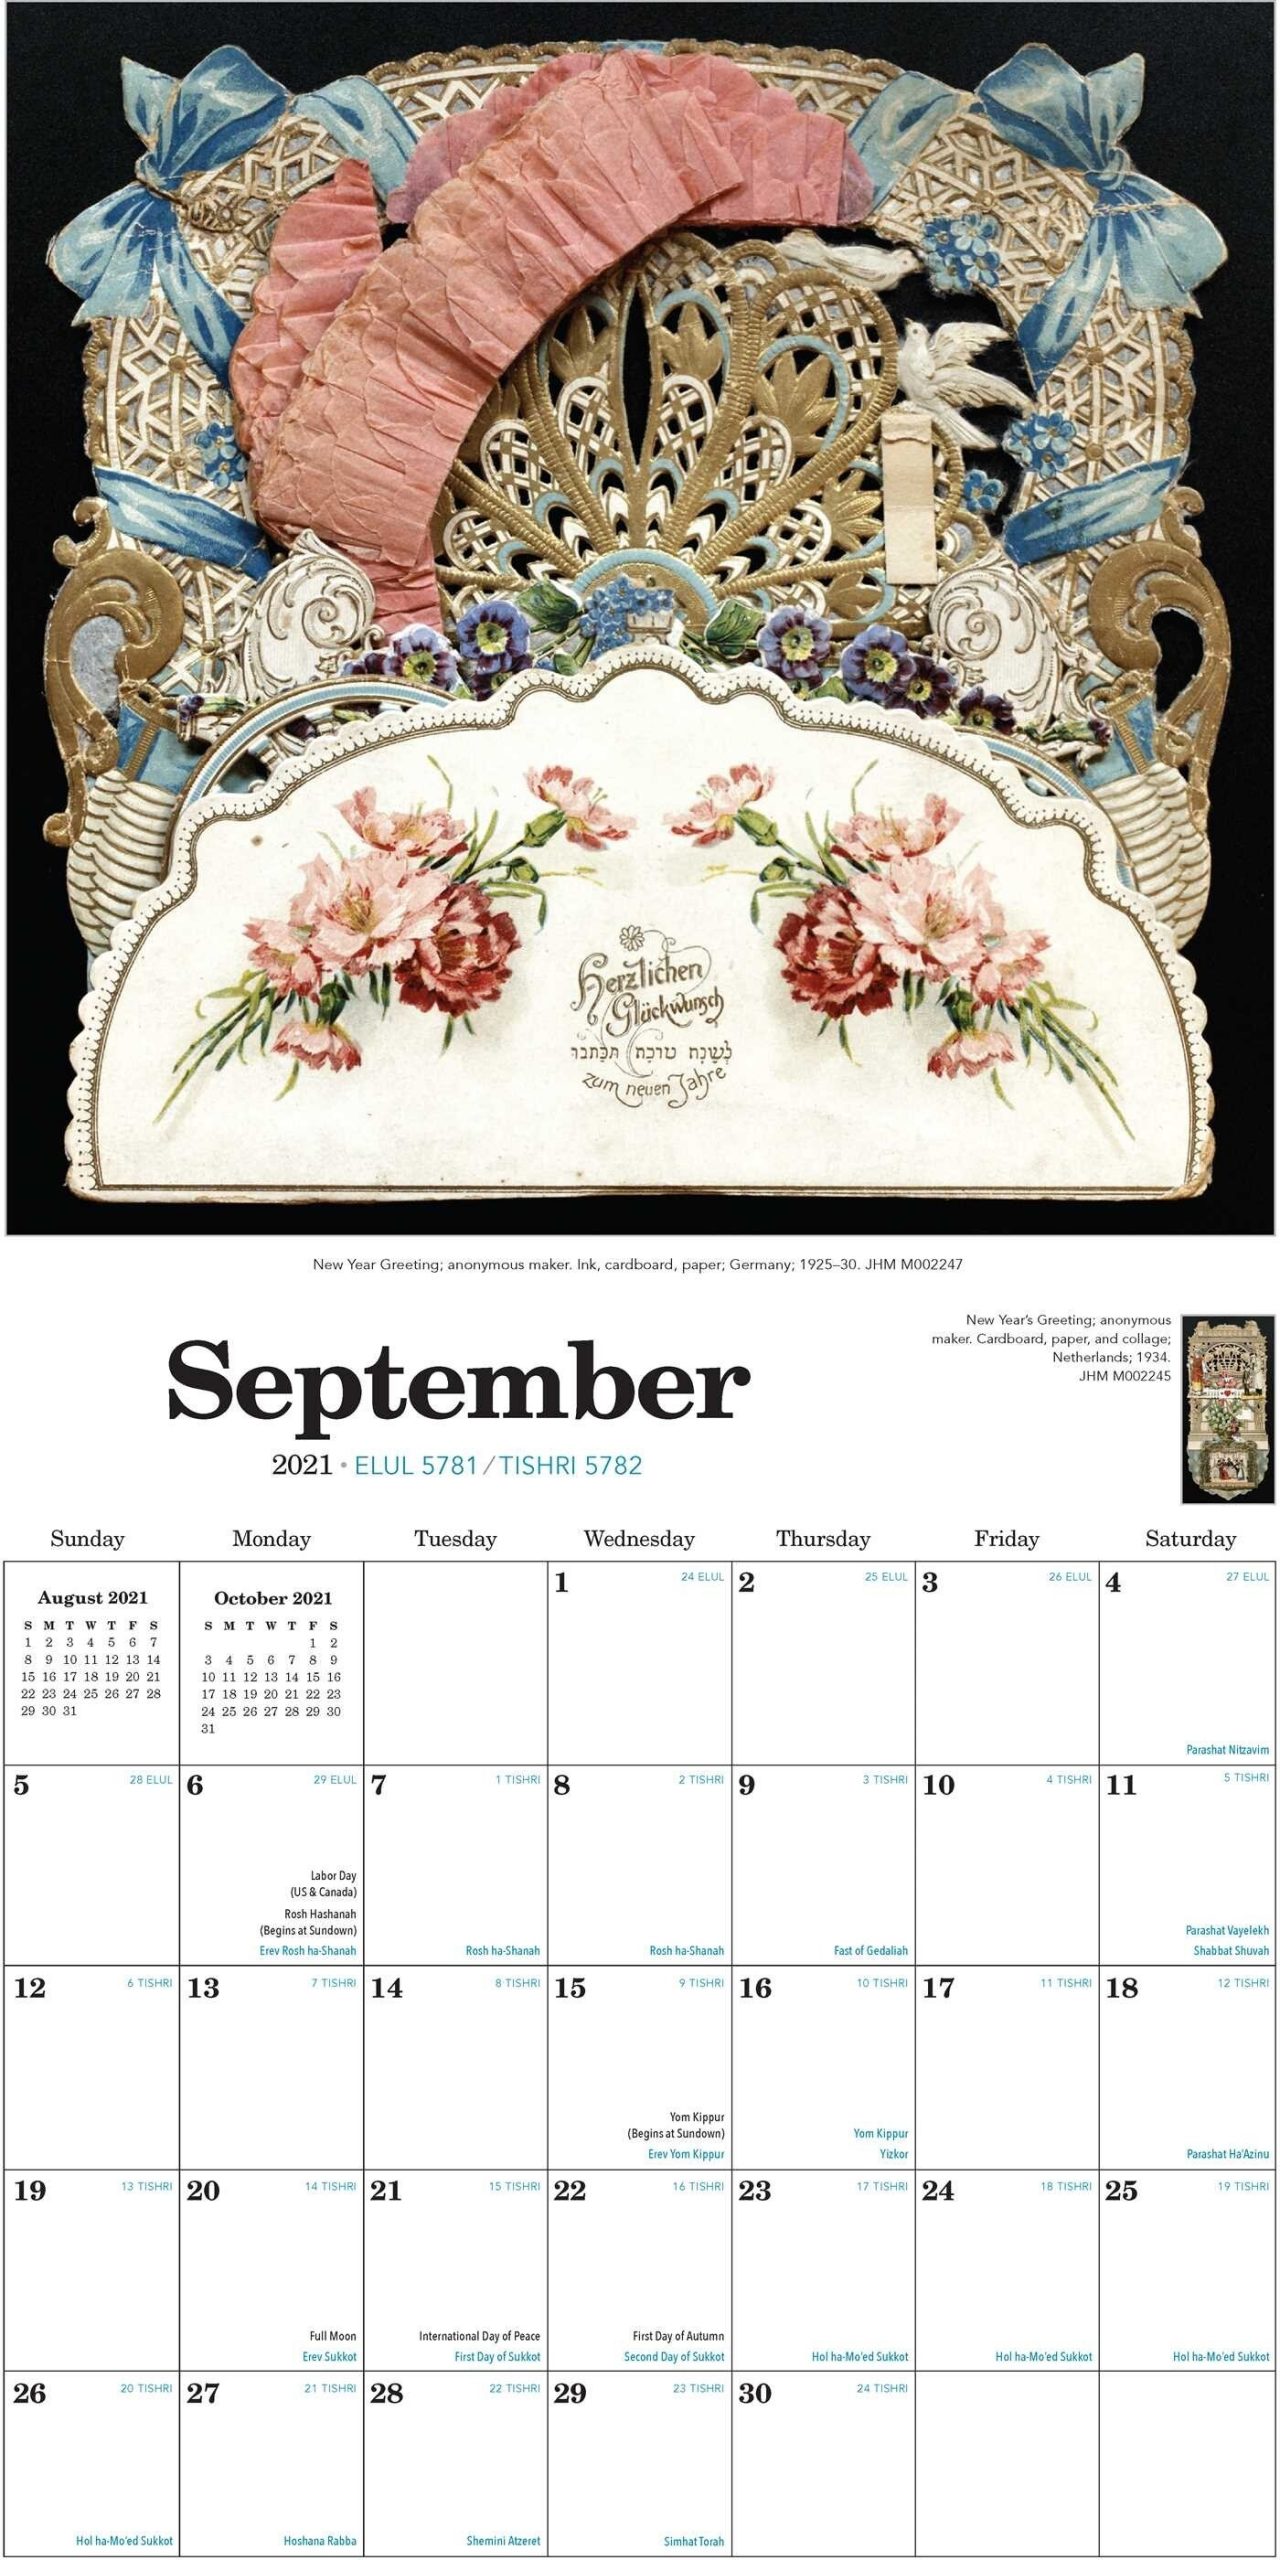 The 2021 Jewish Calendar 16-Month Wall Calendar - Book-Hebrew Calendar October 2021